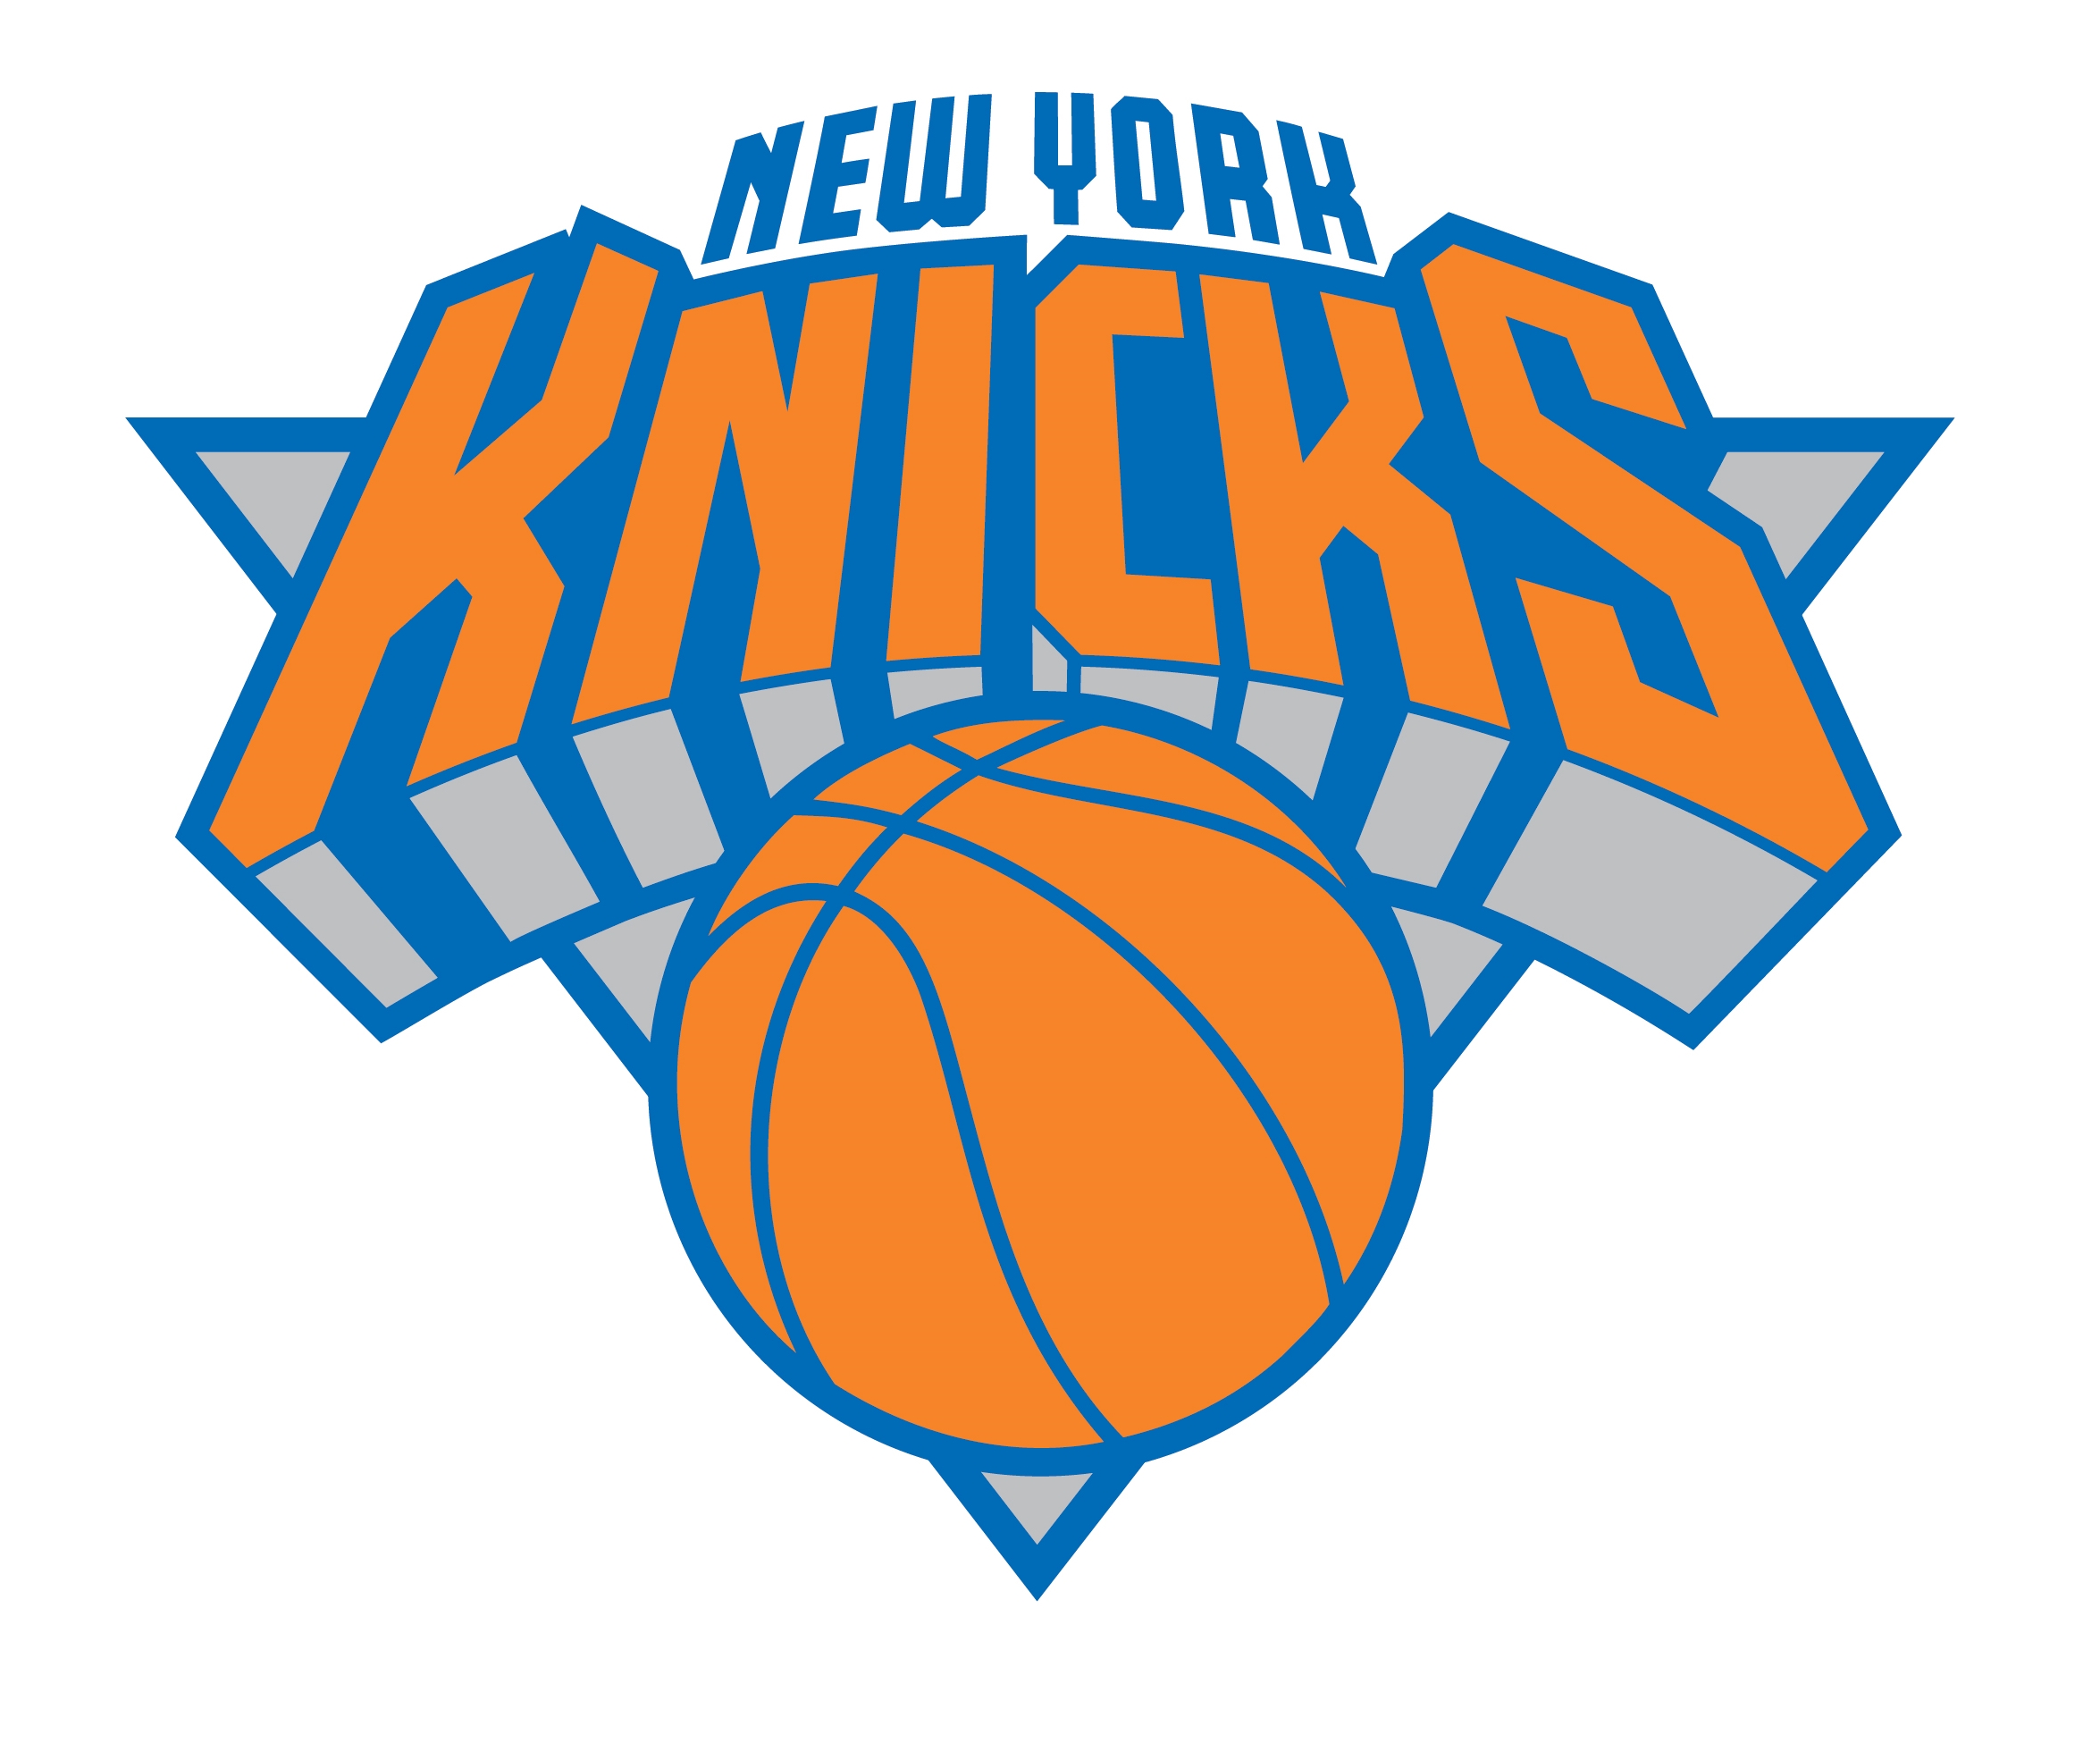 New York Knicks logo, logotype, emblem